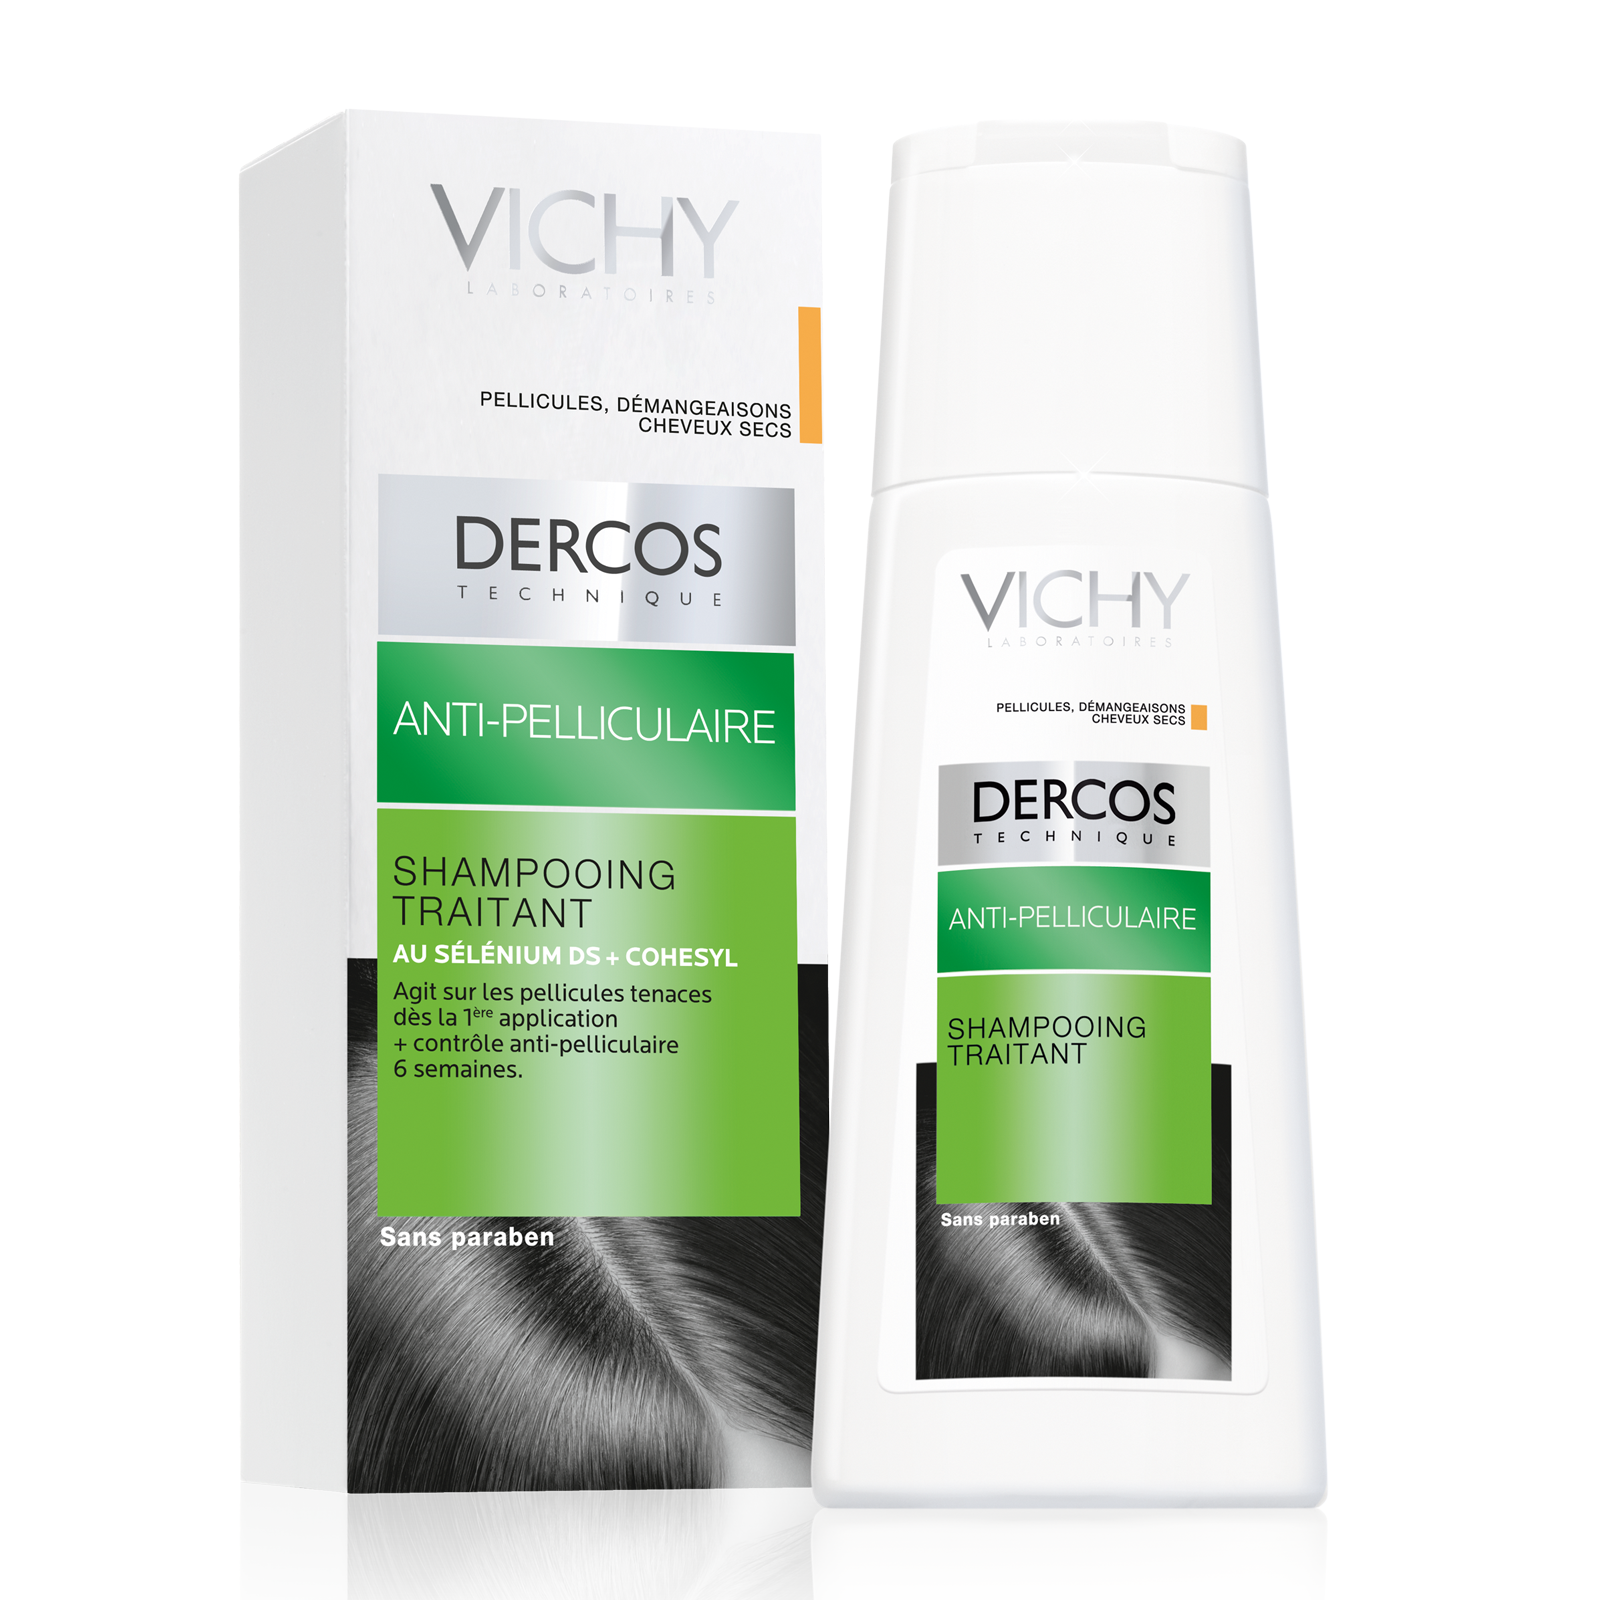 Vichy_Dercos_Anti_Dandruff_Shampoo_Dry_200ml_1392738553.png